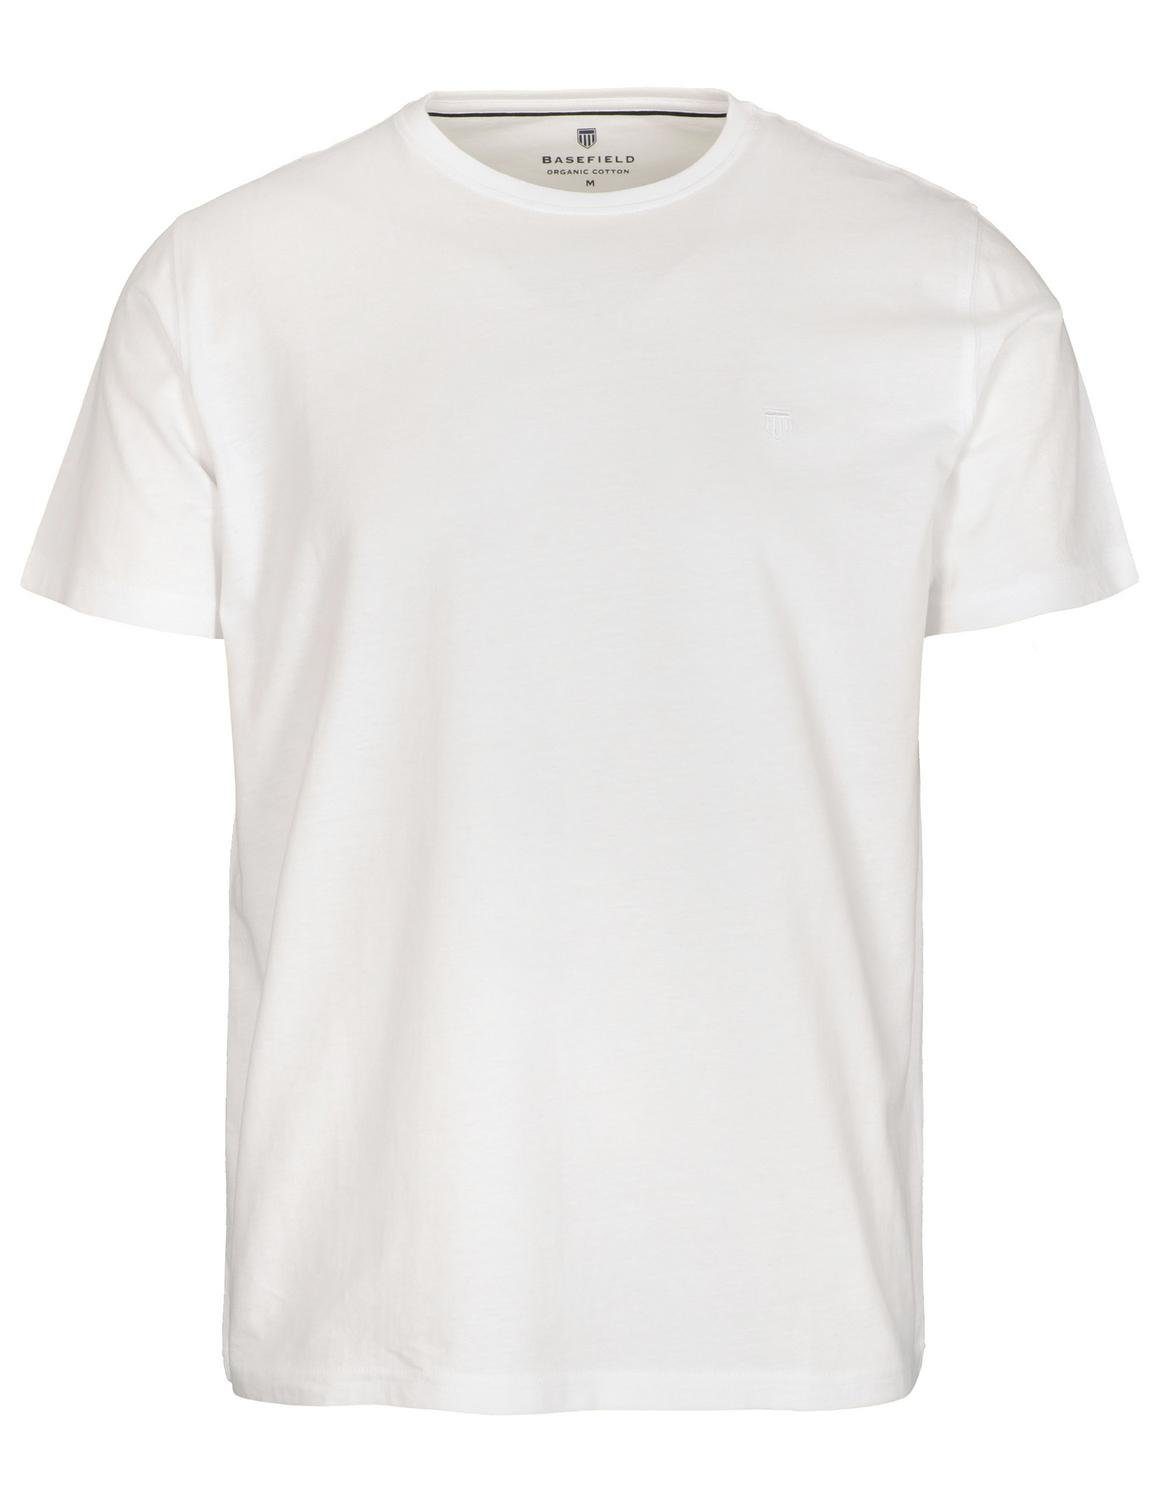 BASEFIELD T-Shirt NOS Basic T Shirt